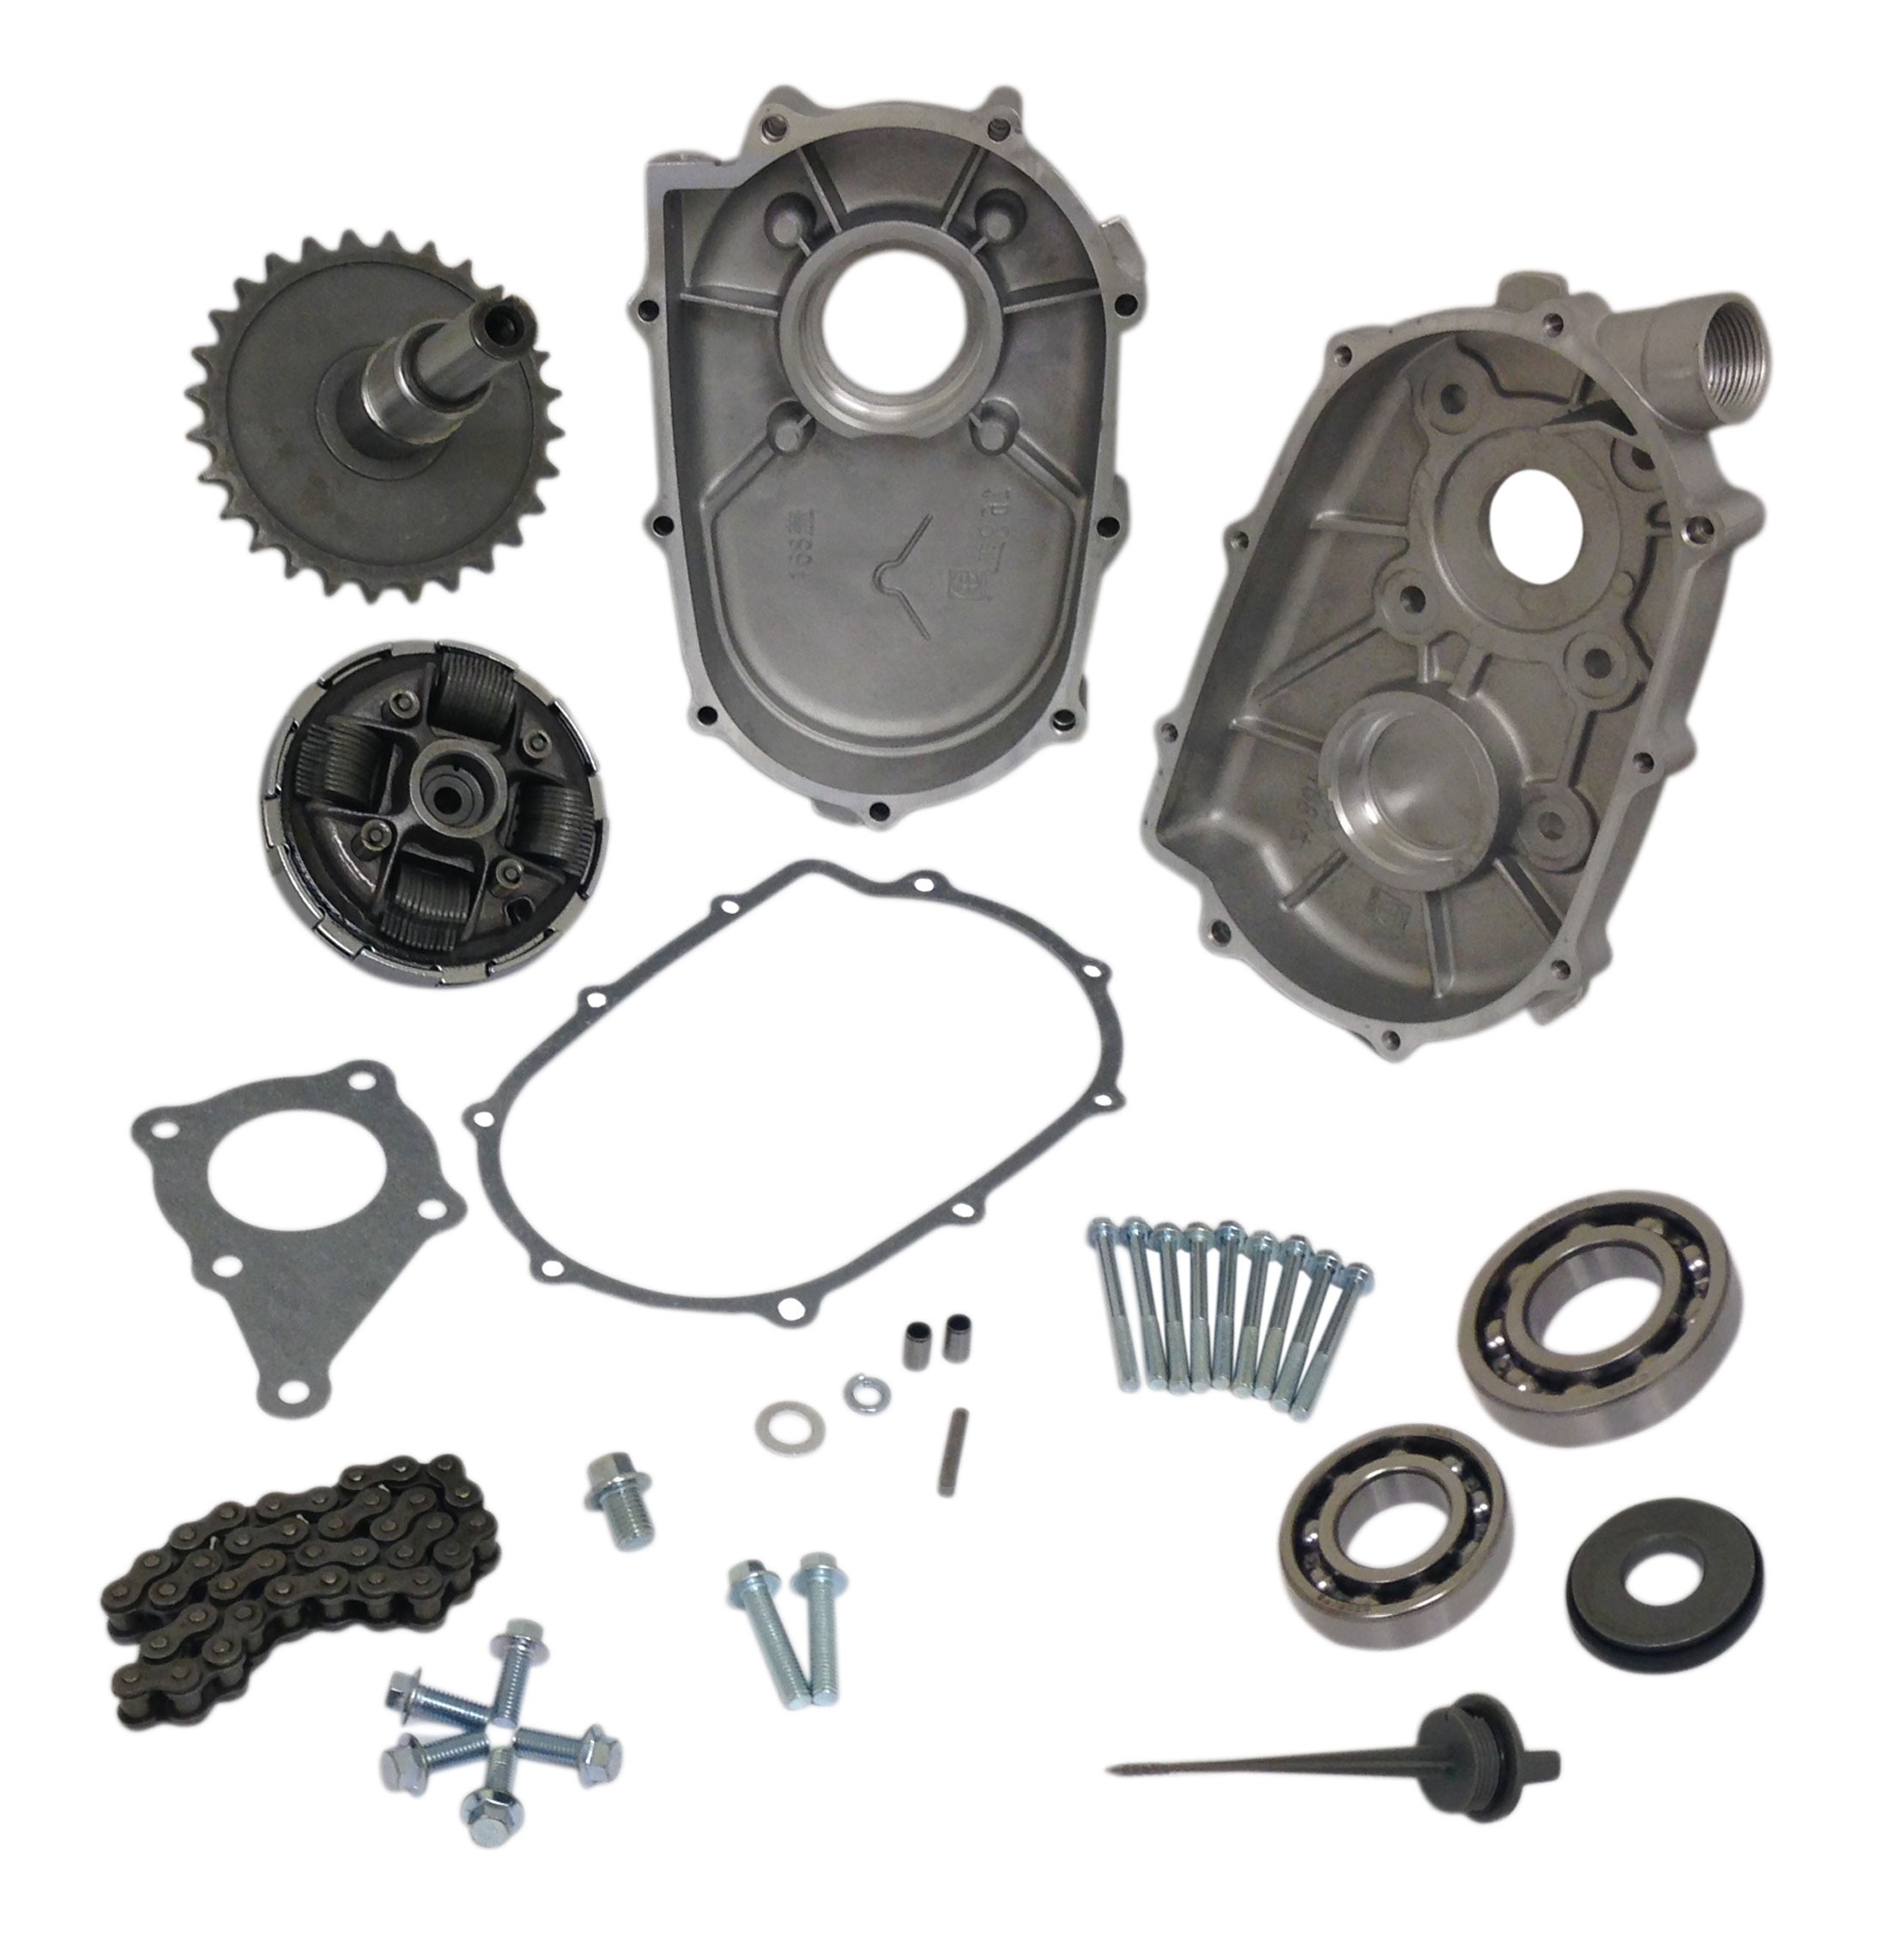 Honda 6 5 Hp Engine Parts Diagram 2 2 1 Reduction Gearbox Kit for Honda 6 5hp Gx200 Engine 20mm Of Honda 6 5 Hp Engine Parts Diagram 2